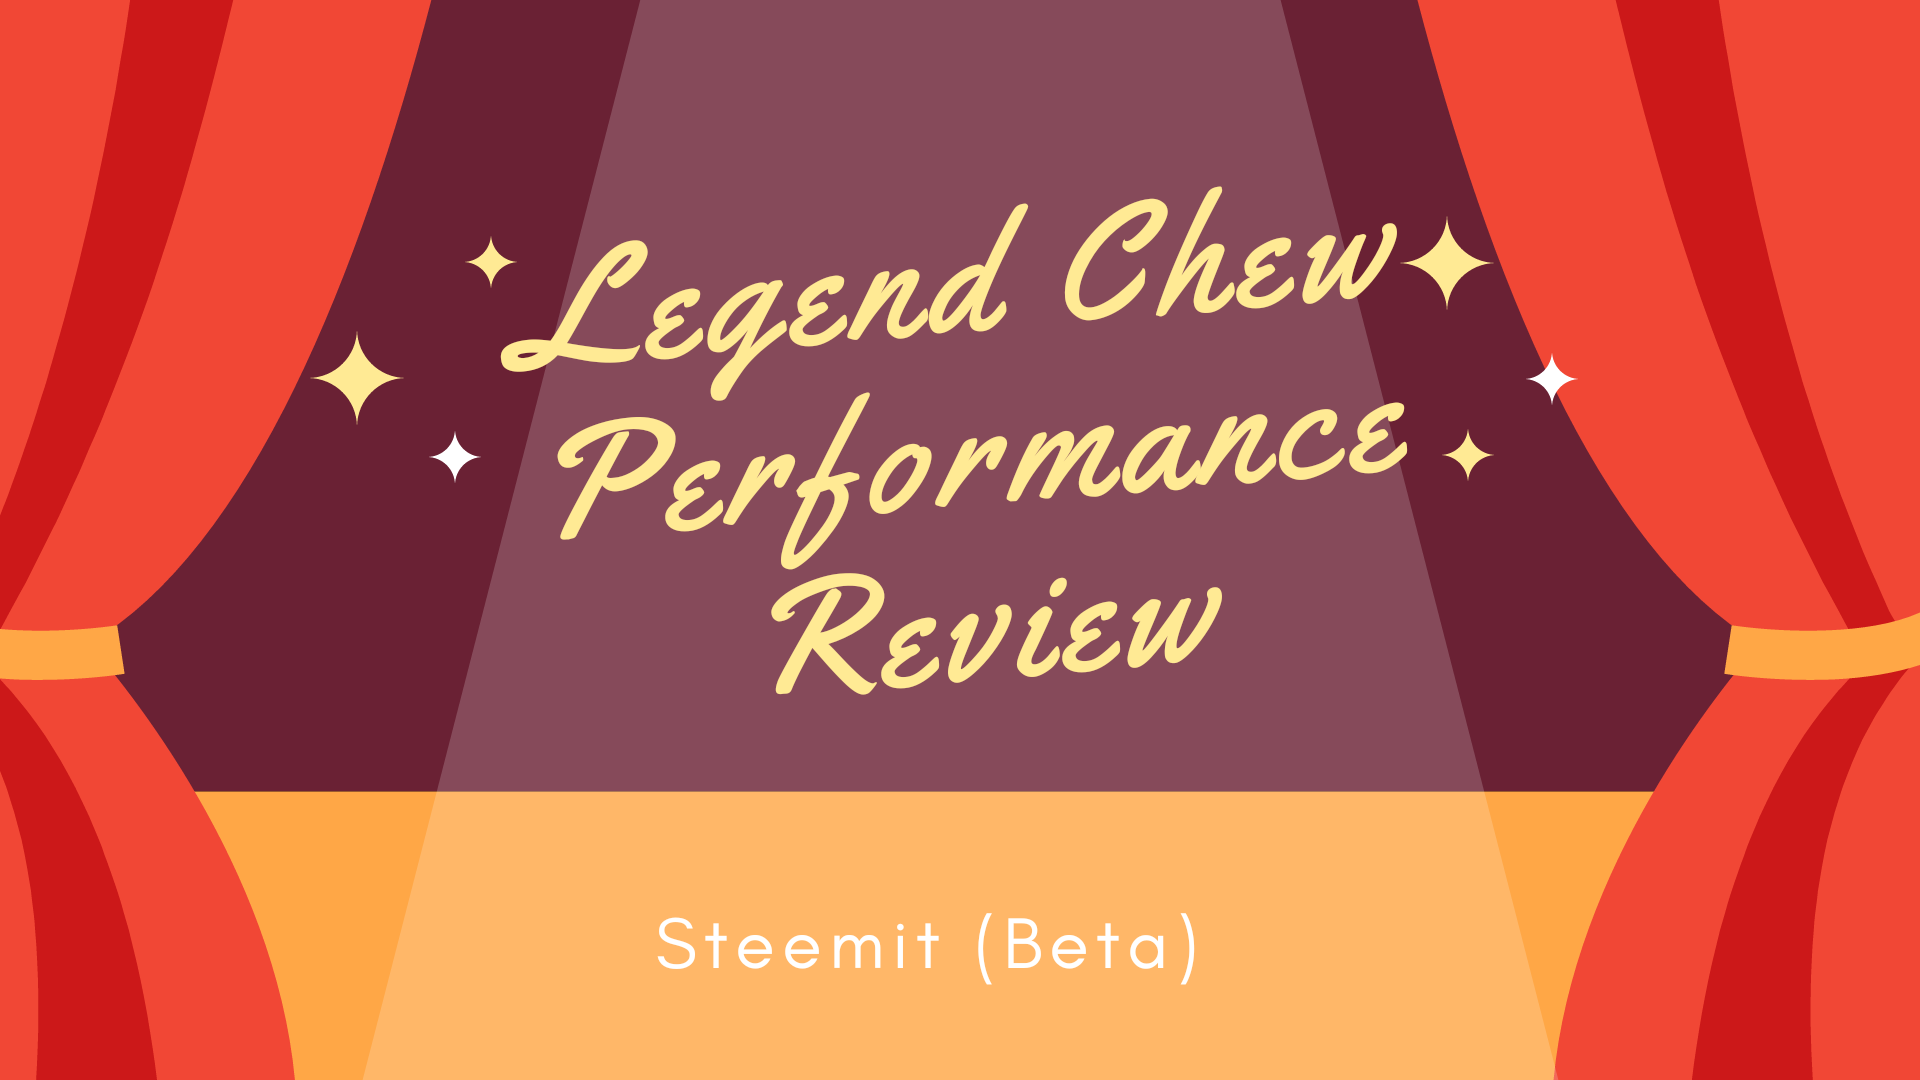 Legend Chew Performance Review (Jul18)